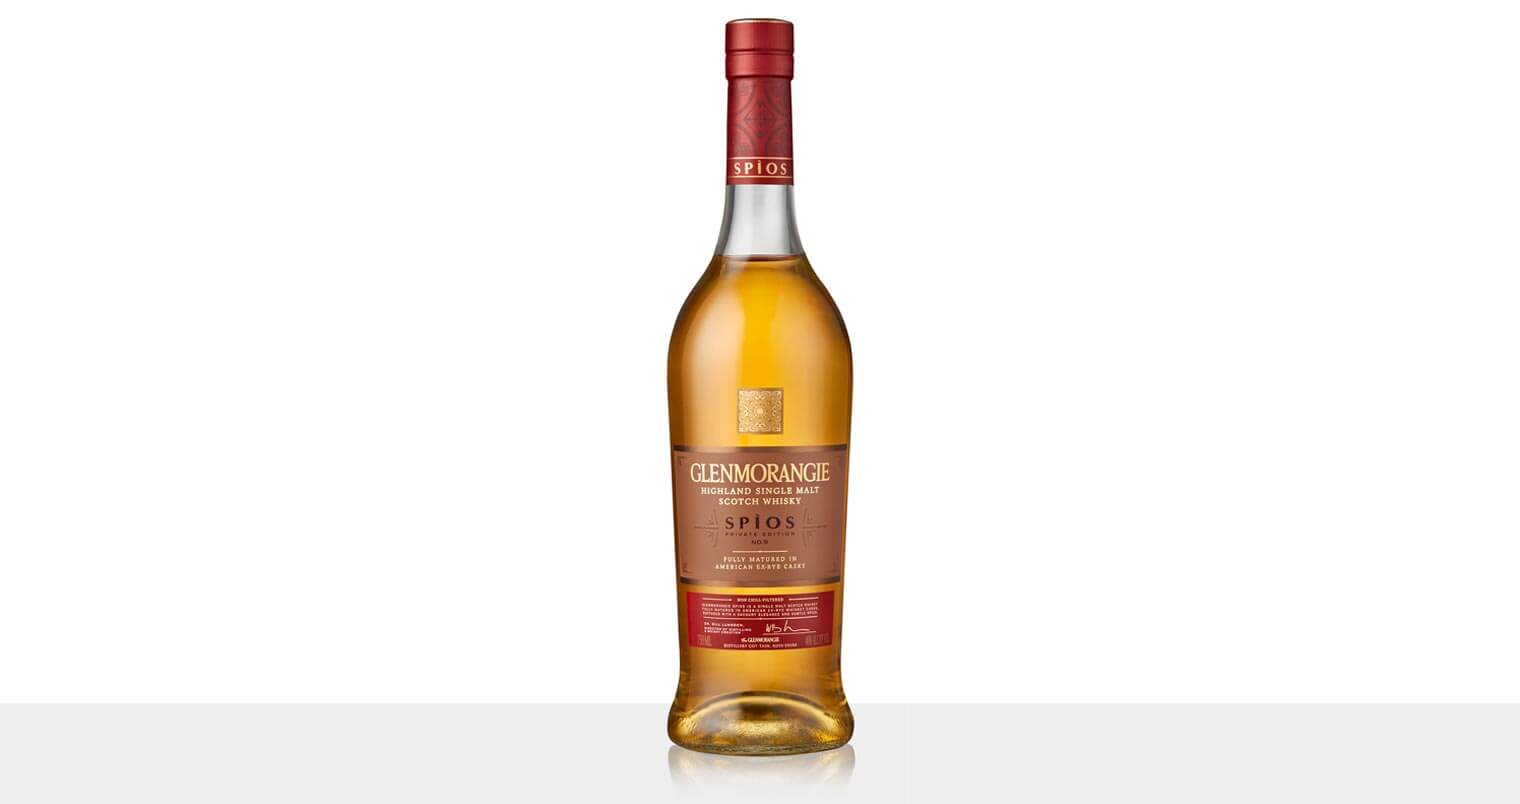 Glenmorangie-Spìos Private Edition Single Malt Whisky, bottle on white, featured image